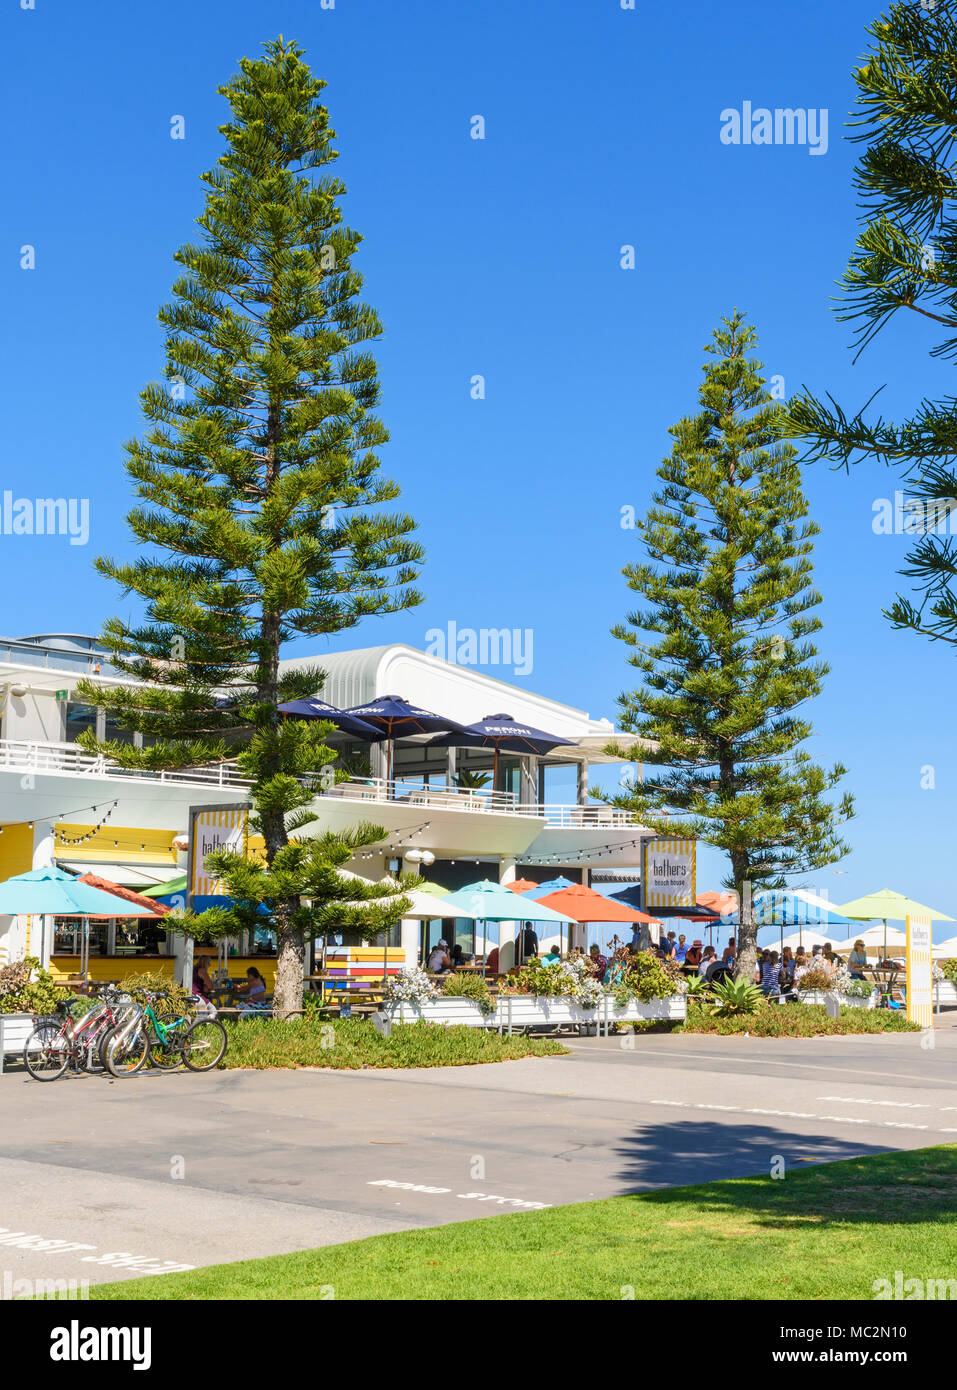 Bathers beach House restaurant along Bathers Beach promenade, Fremantle, Western Australia, Australia Stock Photo